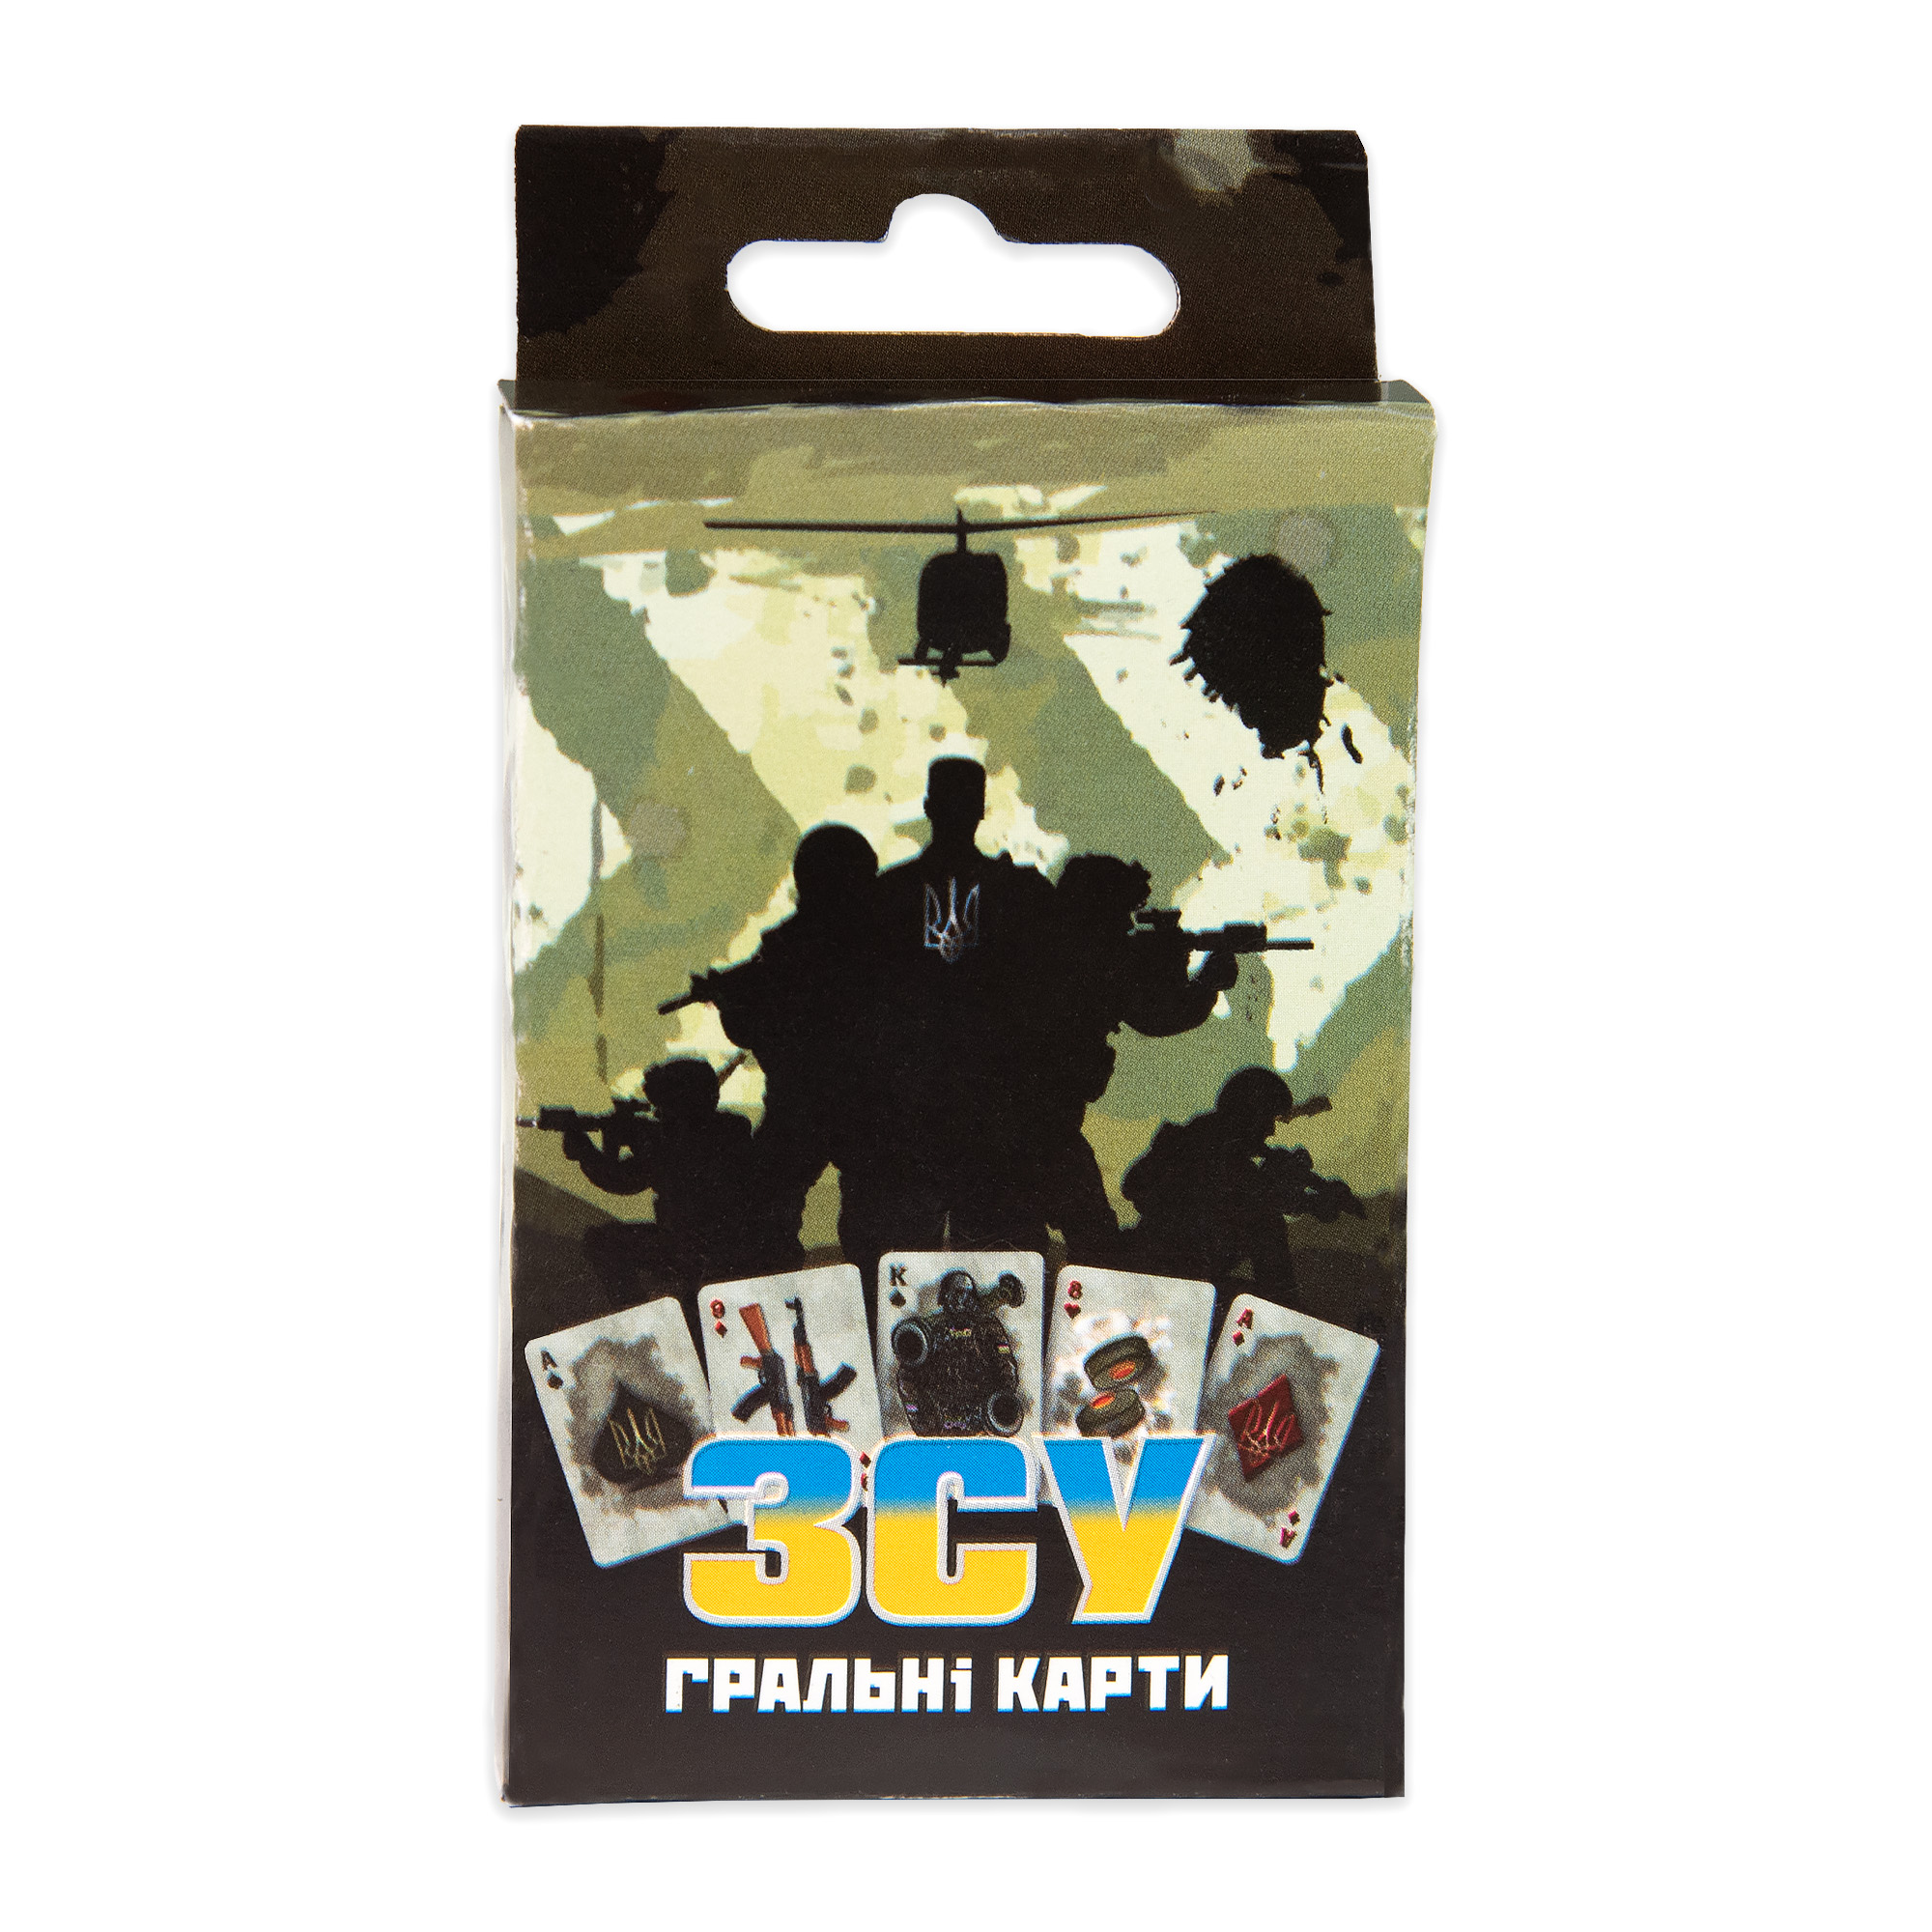 Board game Strateg APU card in Ukrainian (30287)